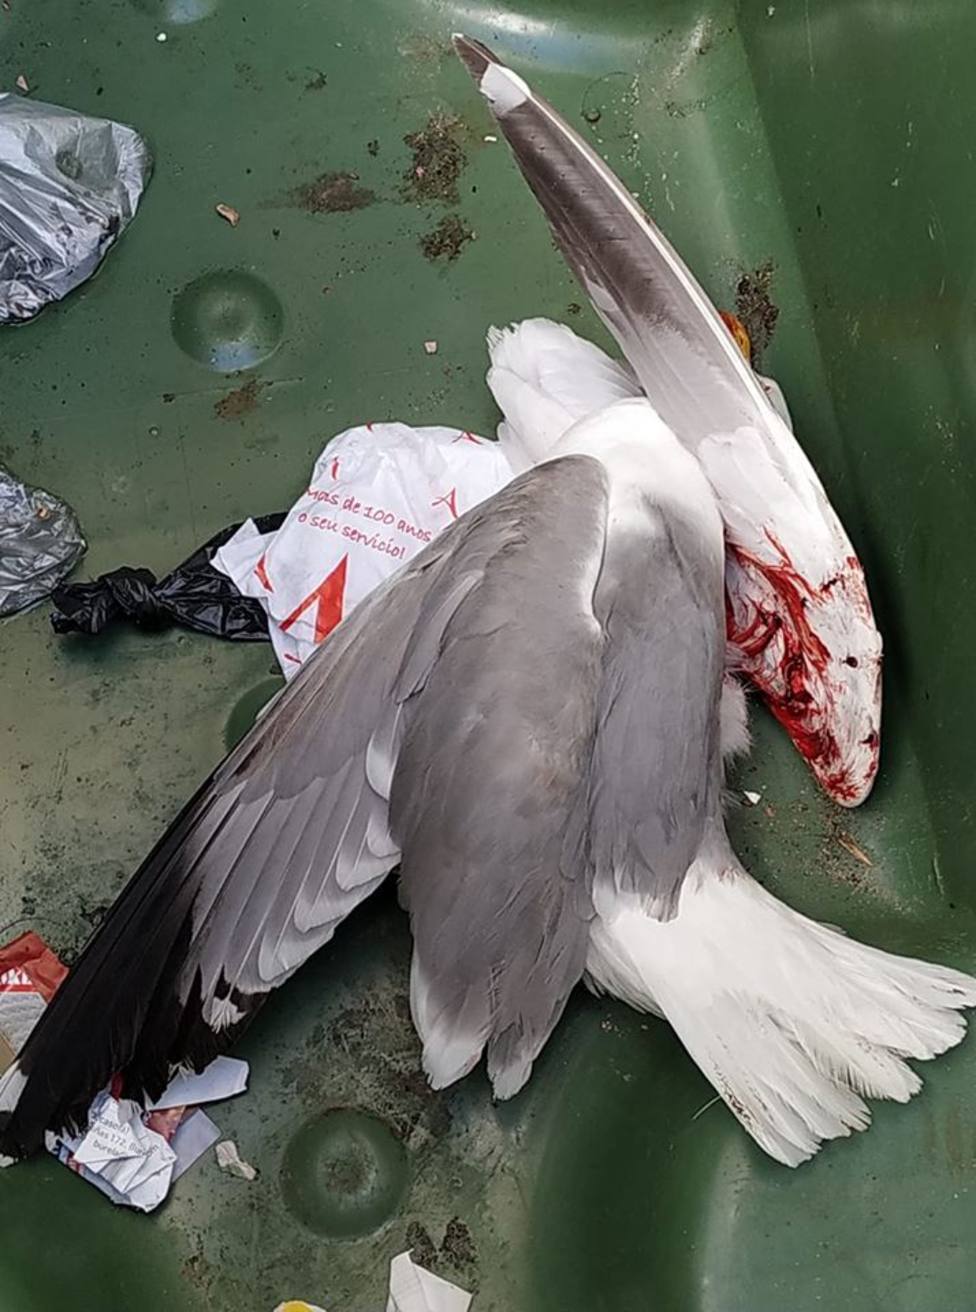 Animalistas denuncian la “muerte a palos” de una gaviota en Mondoñedo